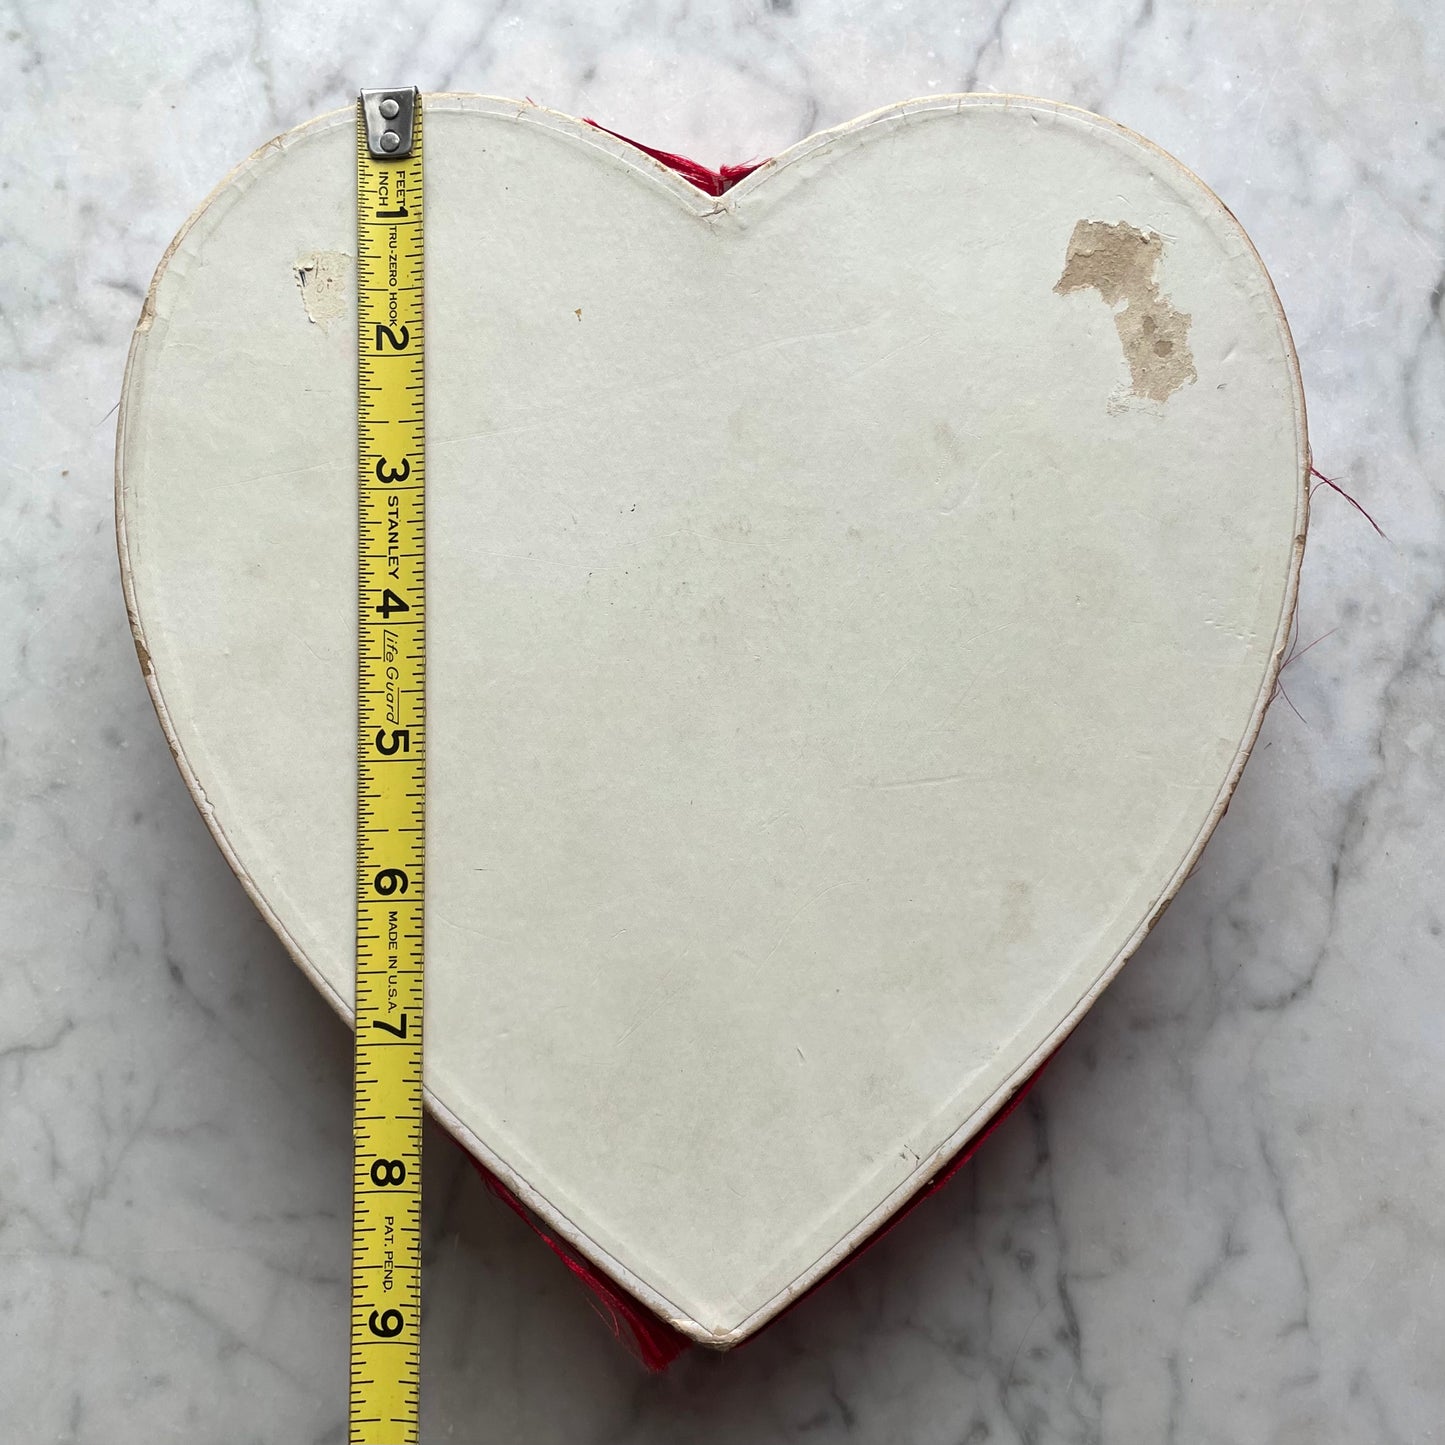 Antique Heart Shaped Box